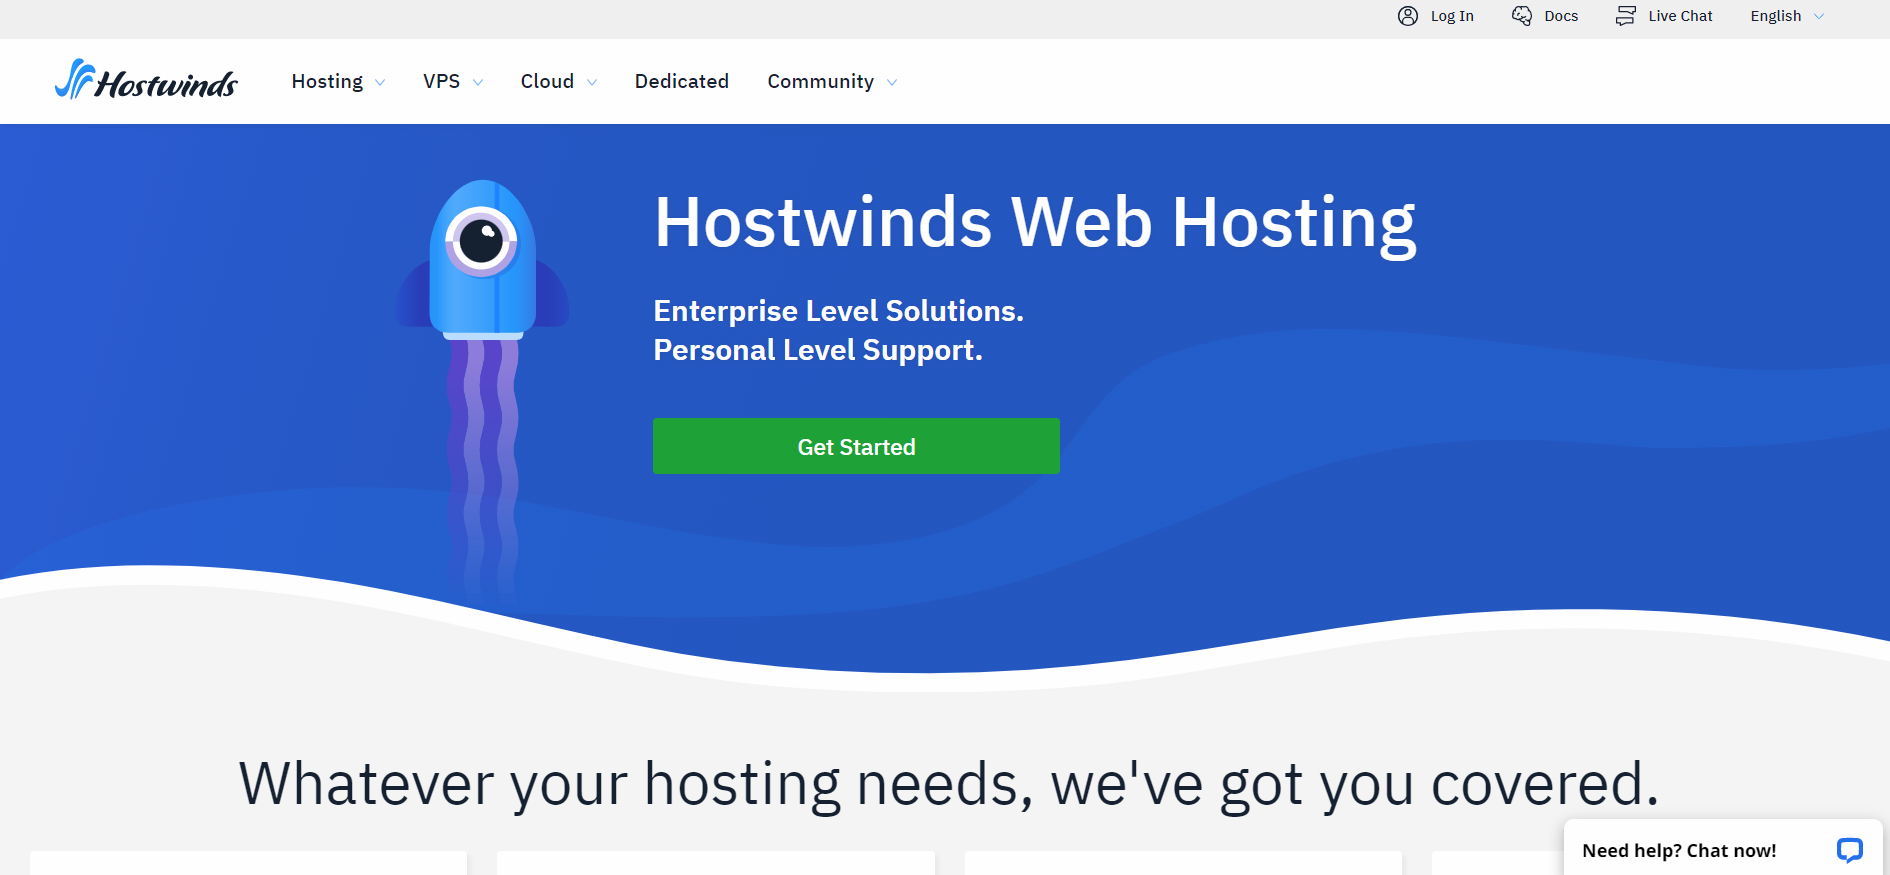 Hostwinds as a cloud hosting provider